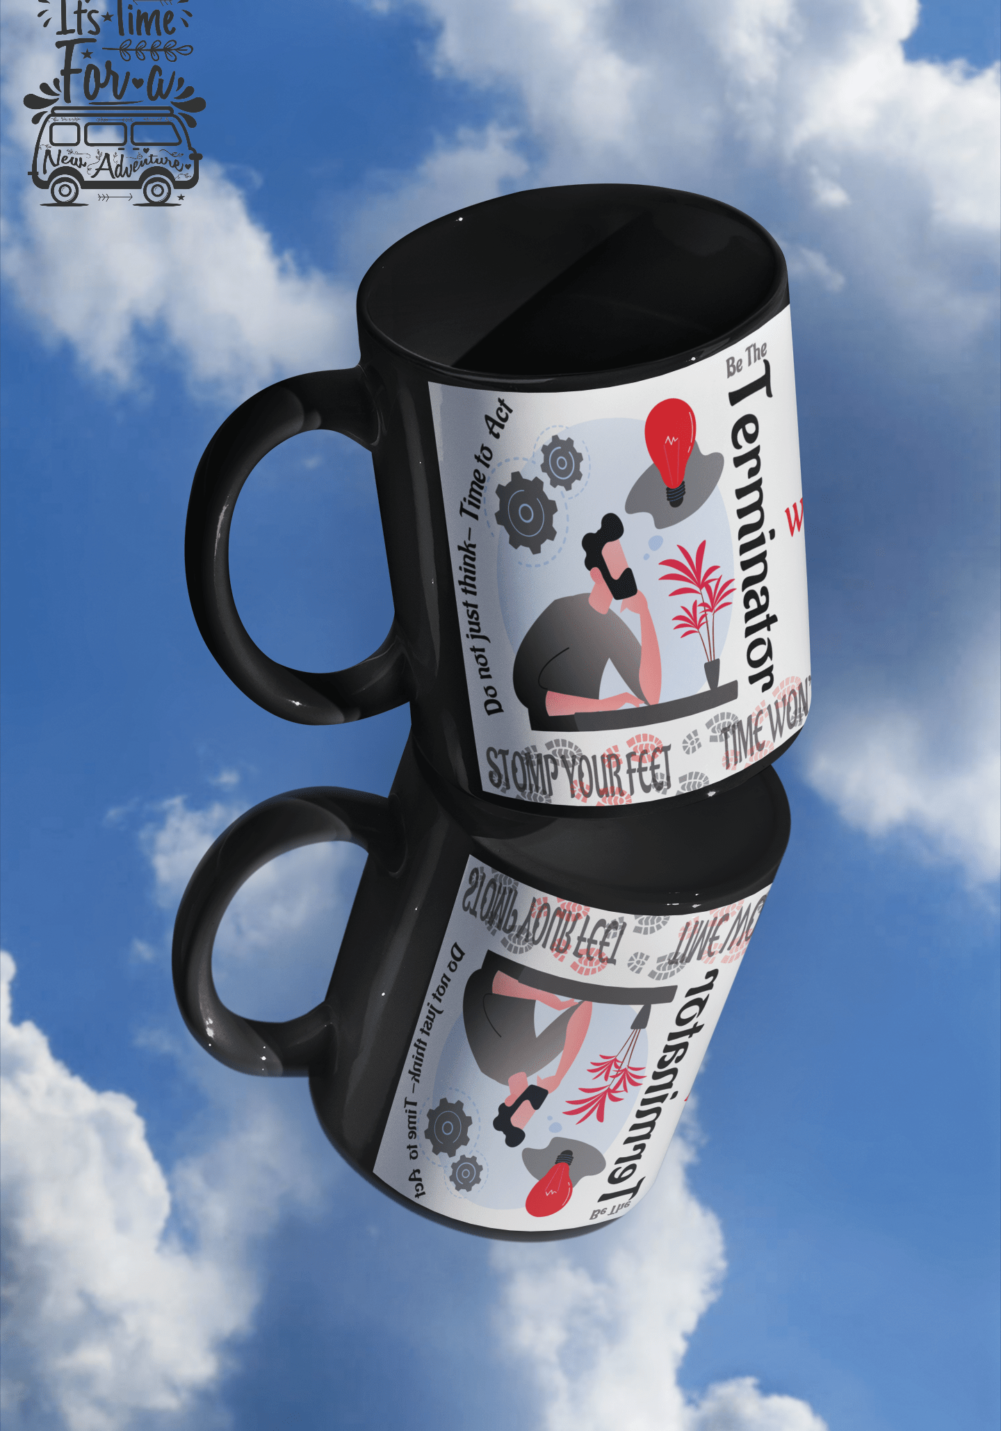 the terminator mug innovative and designer mug motivational mug creative mug designer and innovative